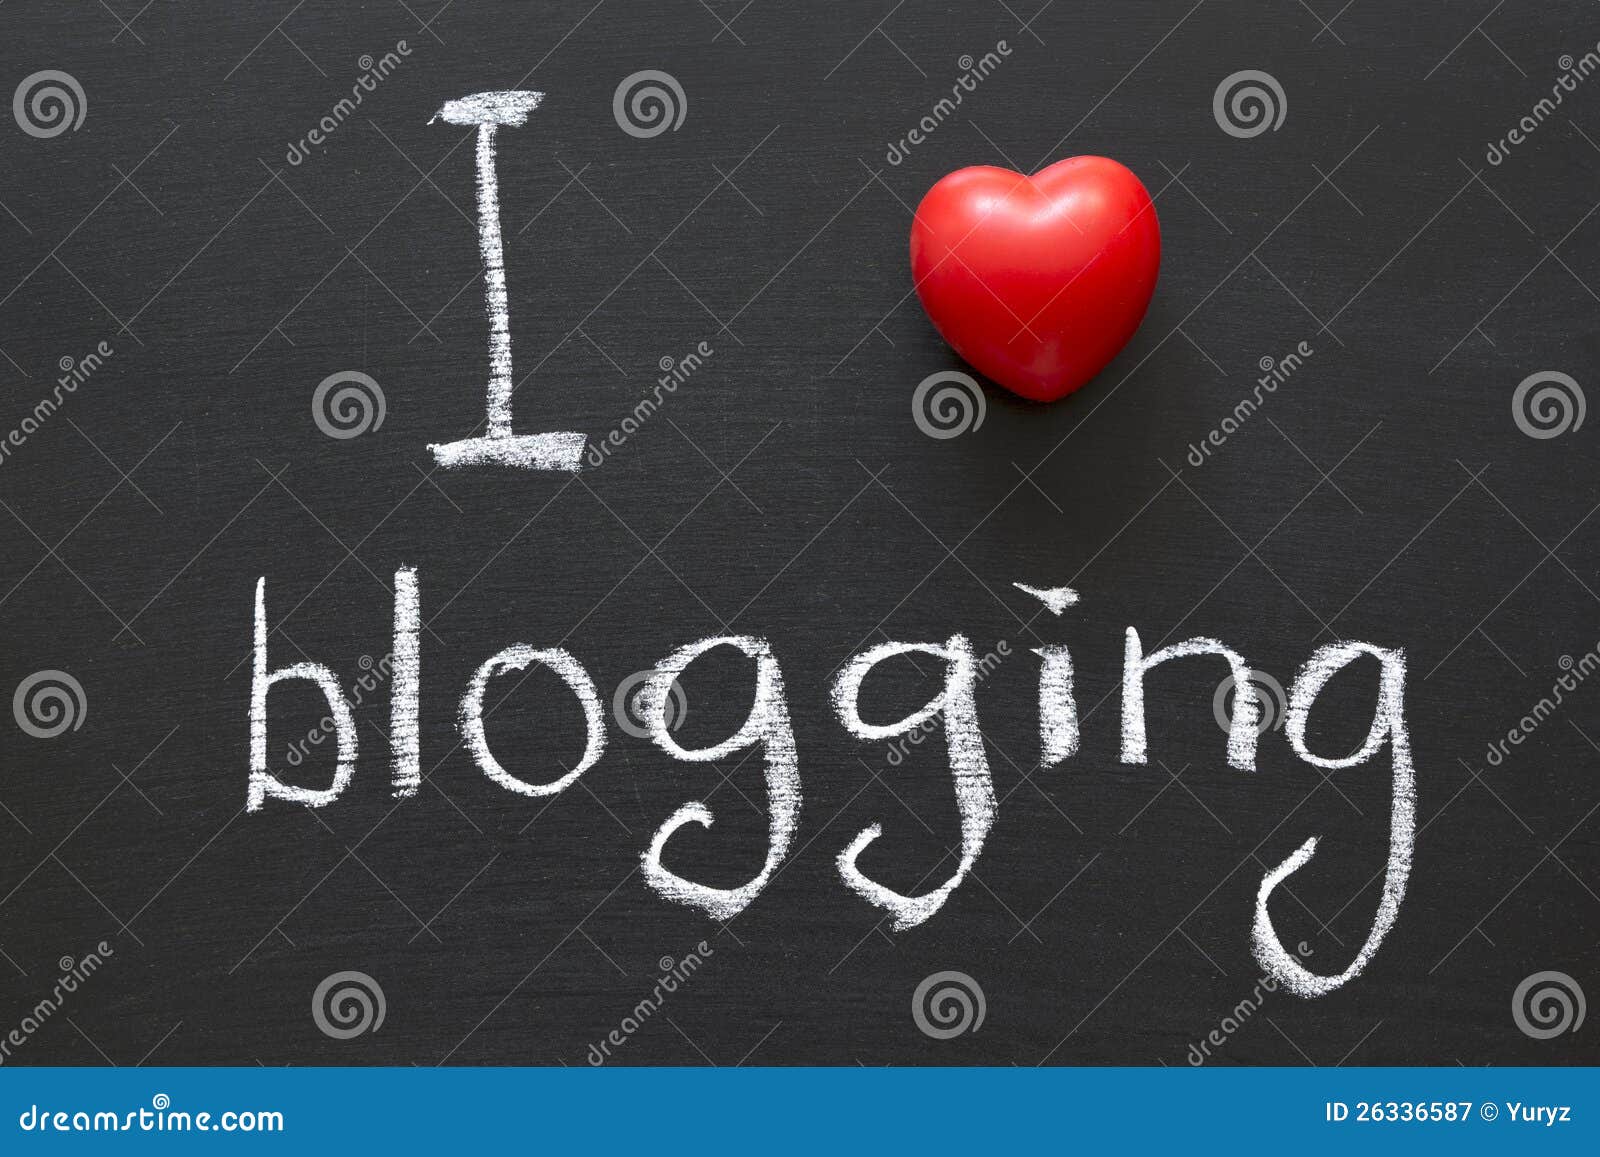 love blogging